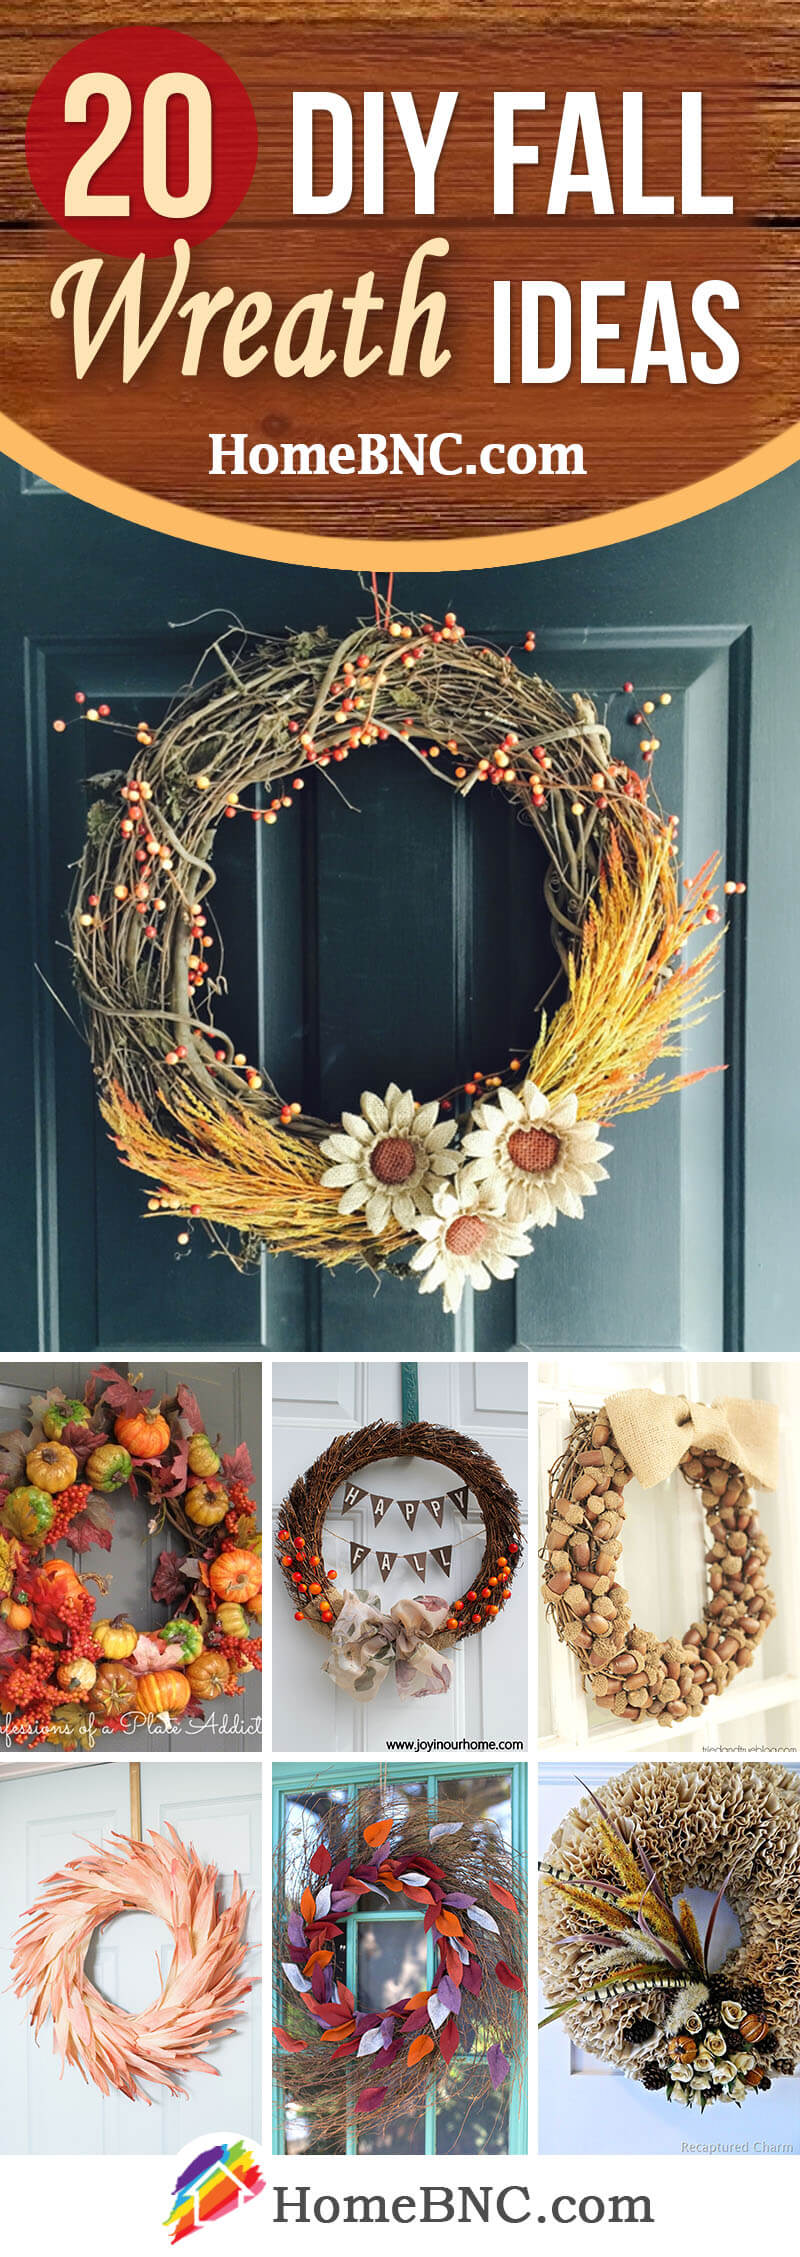 1 Make a simple fall wreath